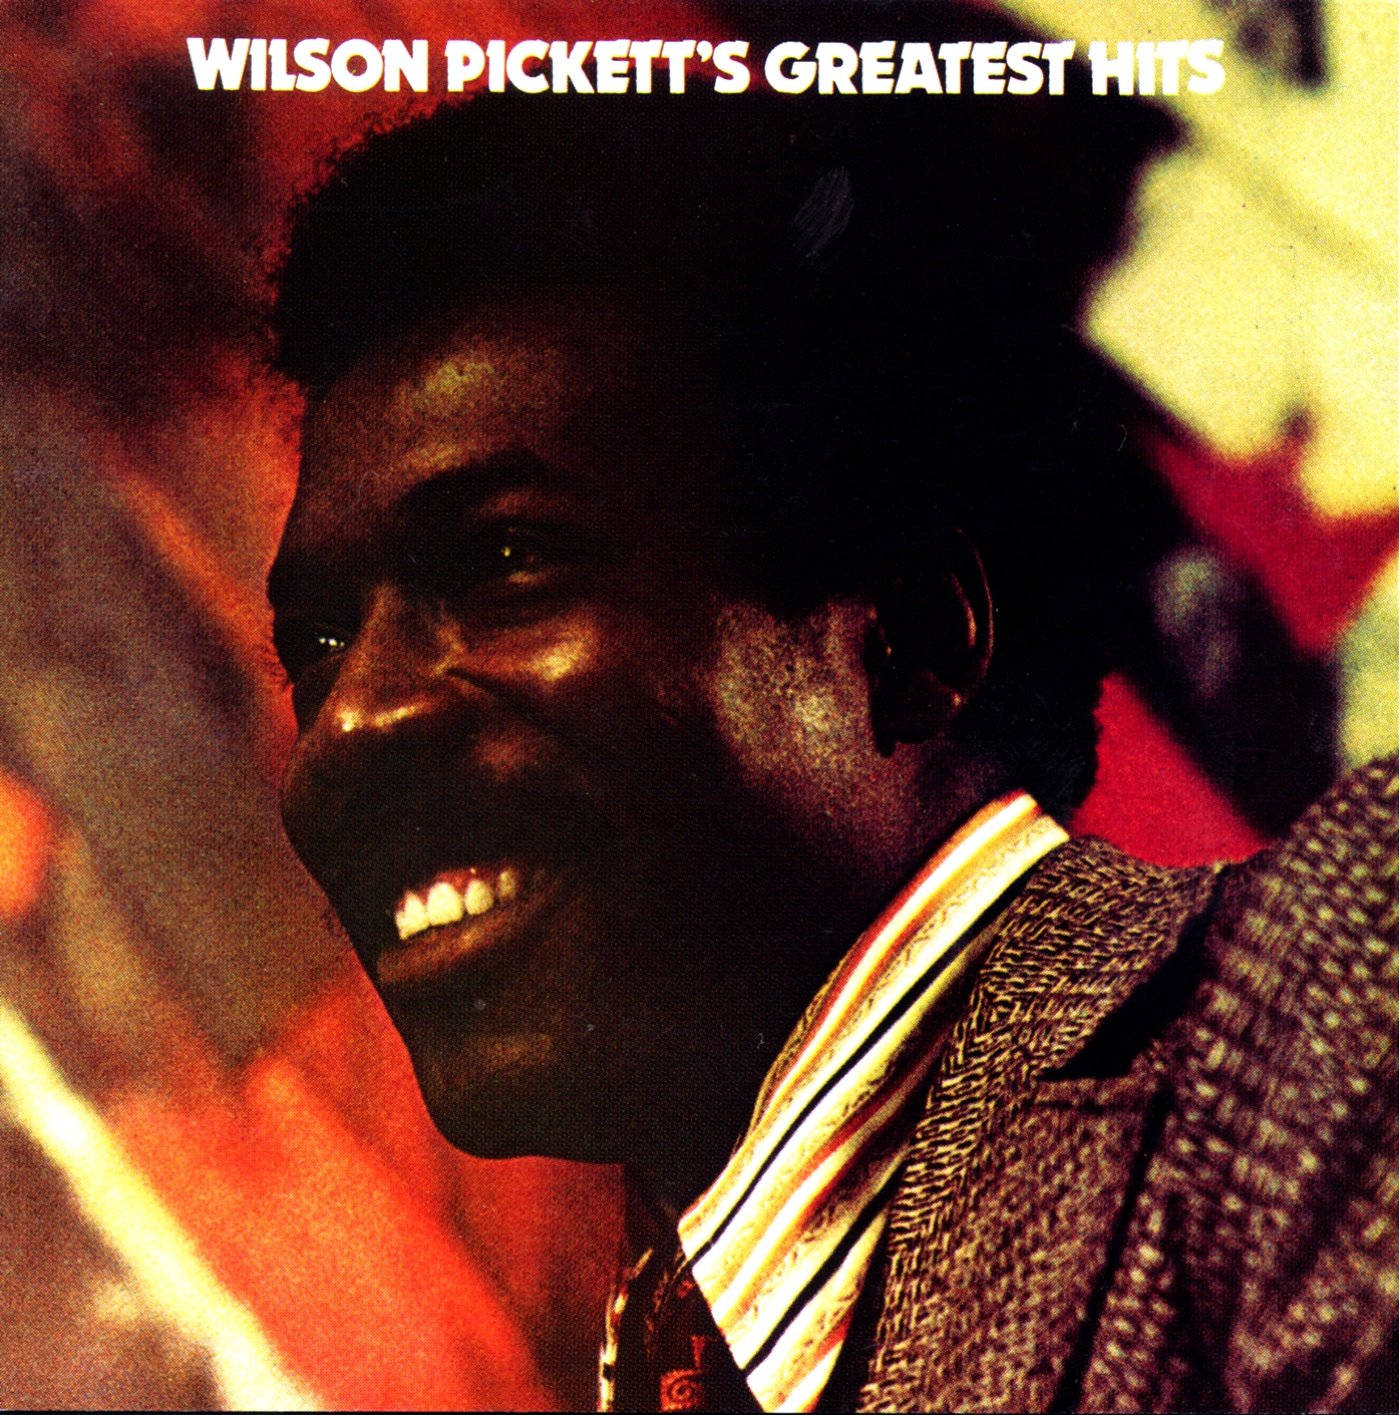 American Singer Wilson Pickett Greatest Hits Cover Wallpaper